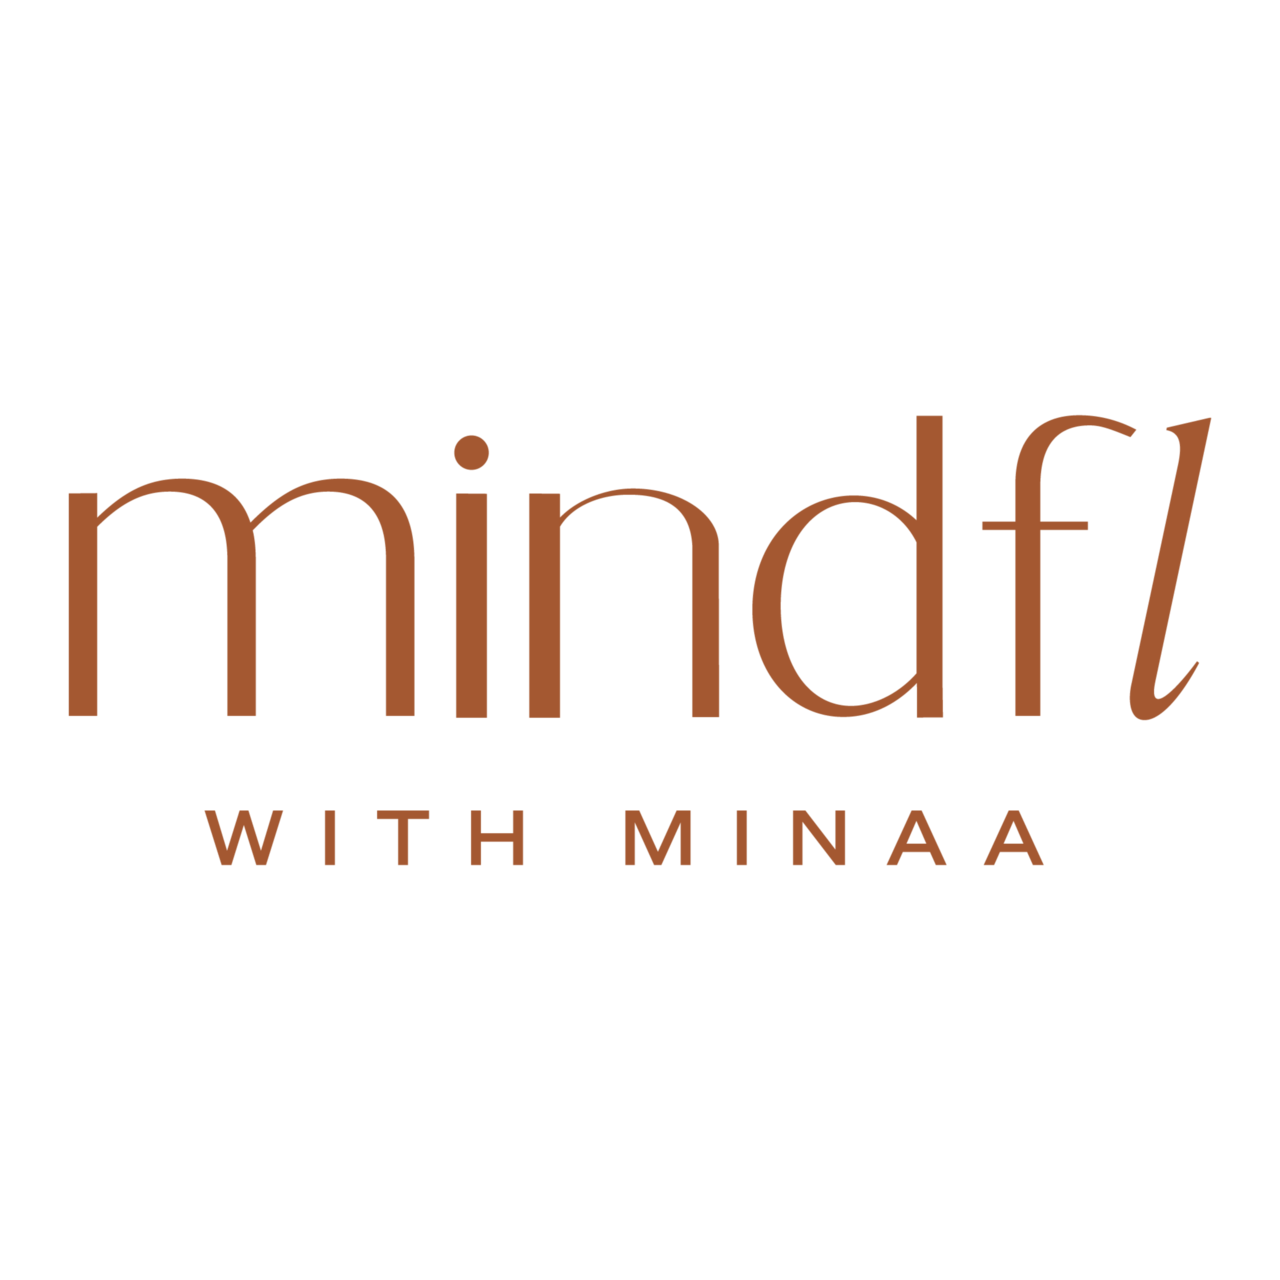 Mindfl With Minaa